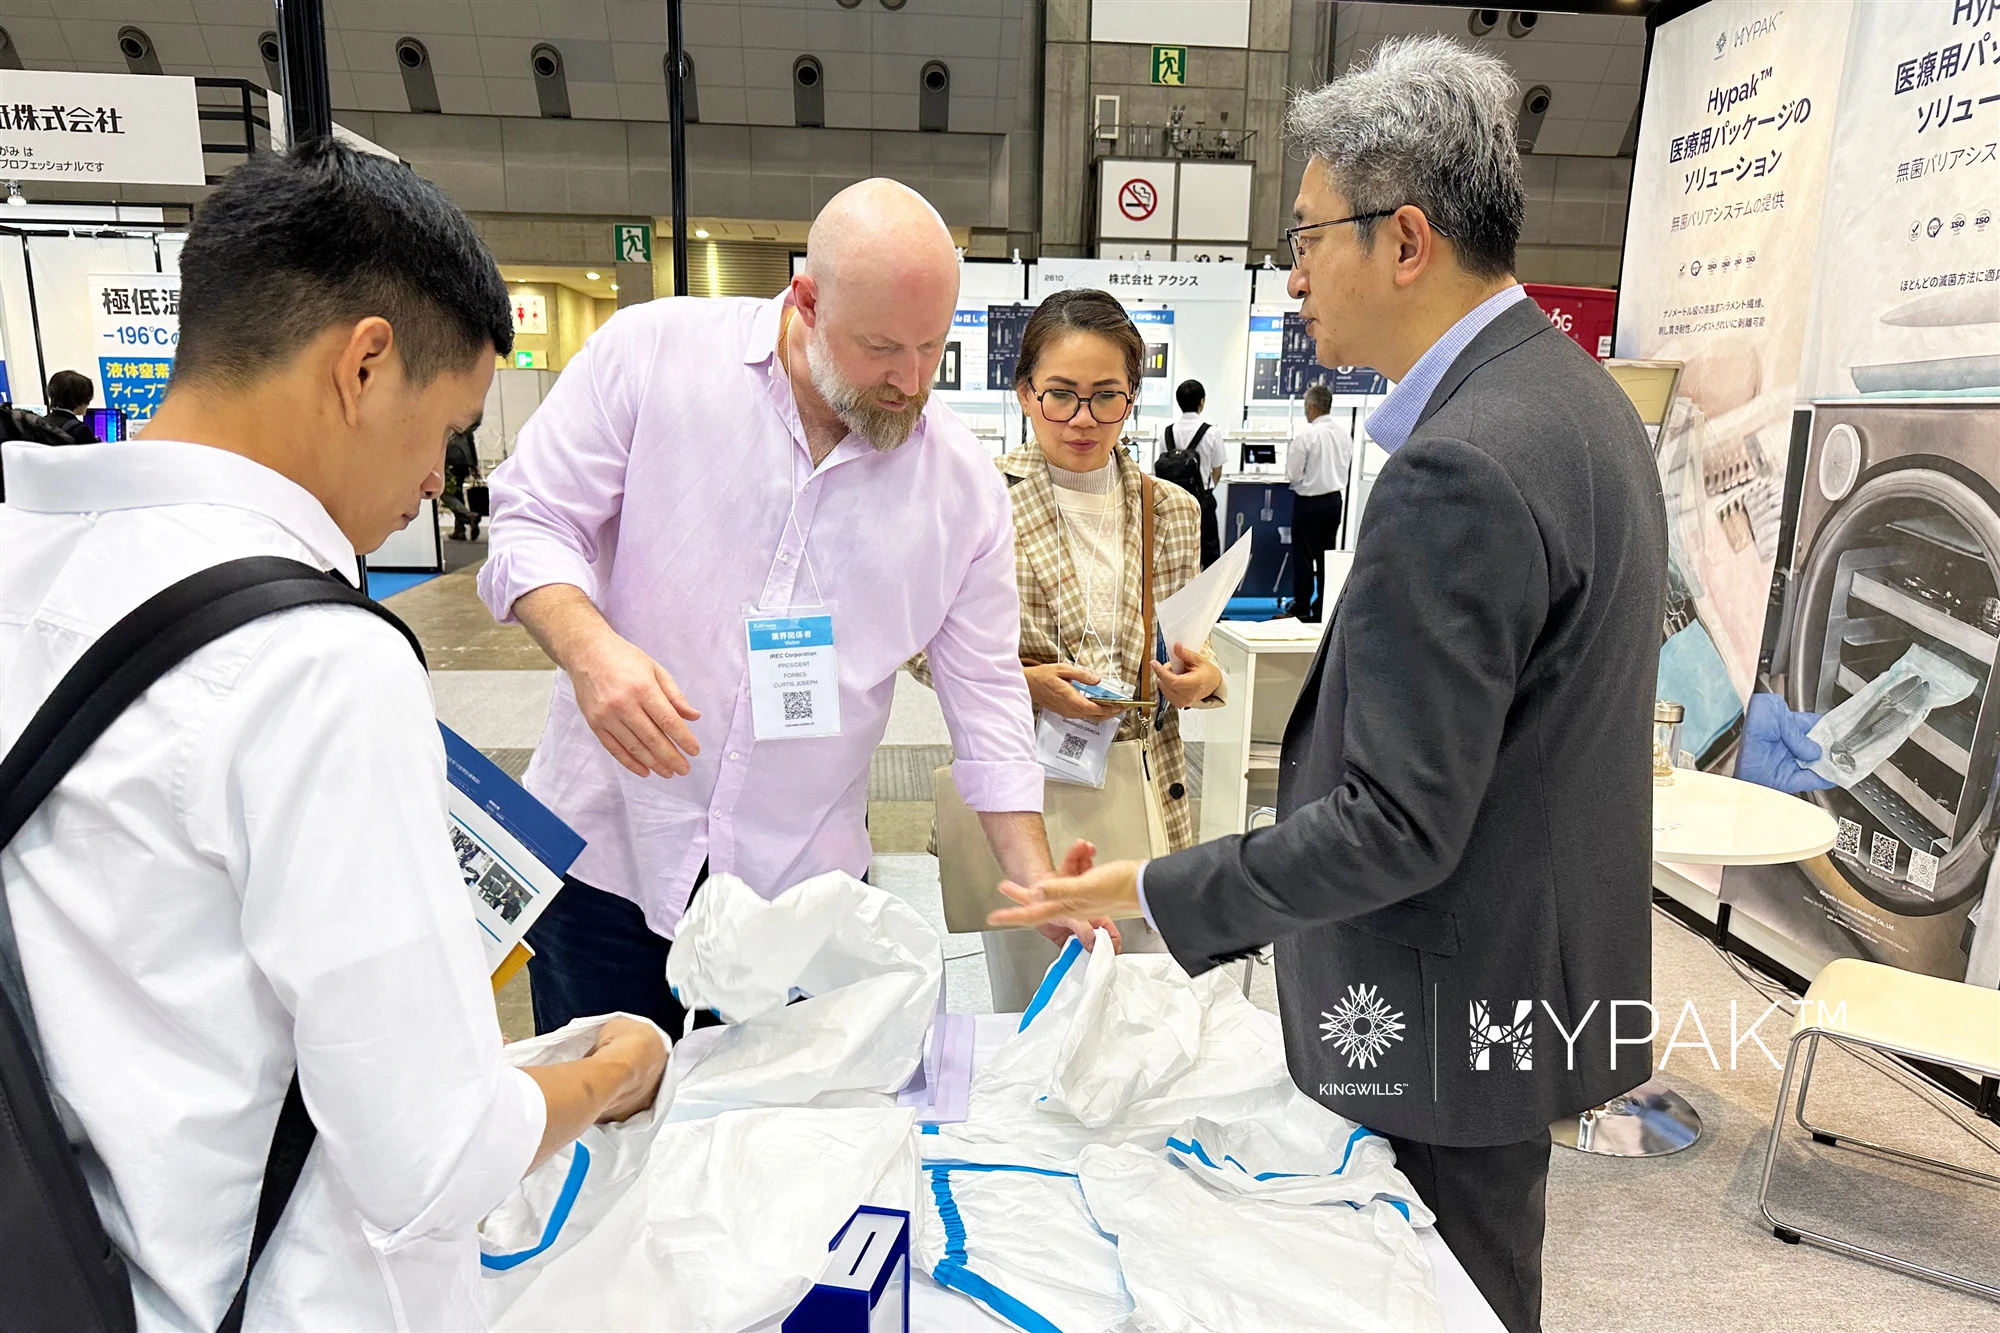 Kingwills™ Unveils Innovative Medical Packaging Solutions at Medtec Japan